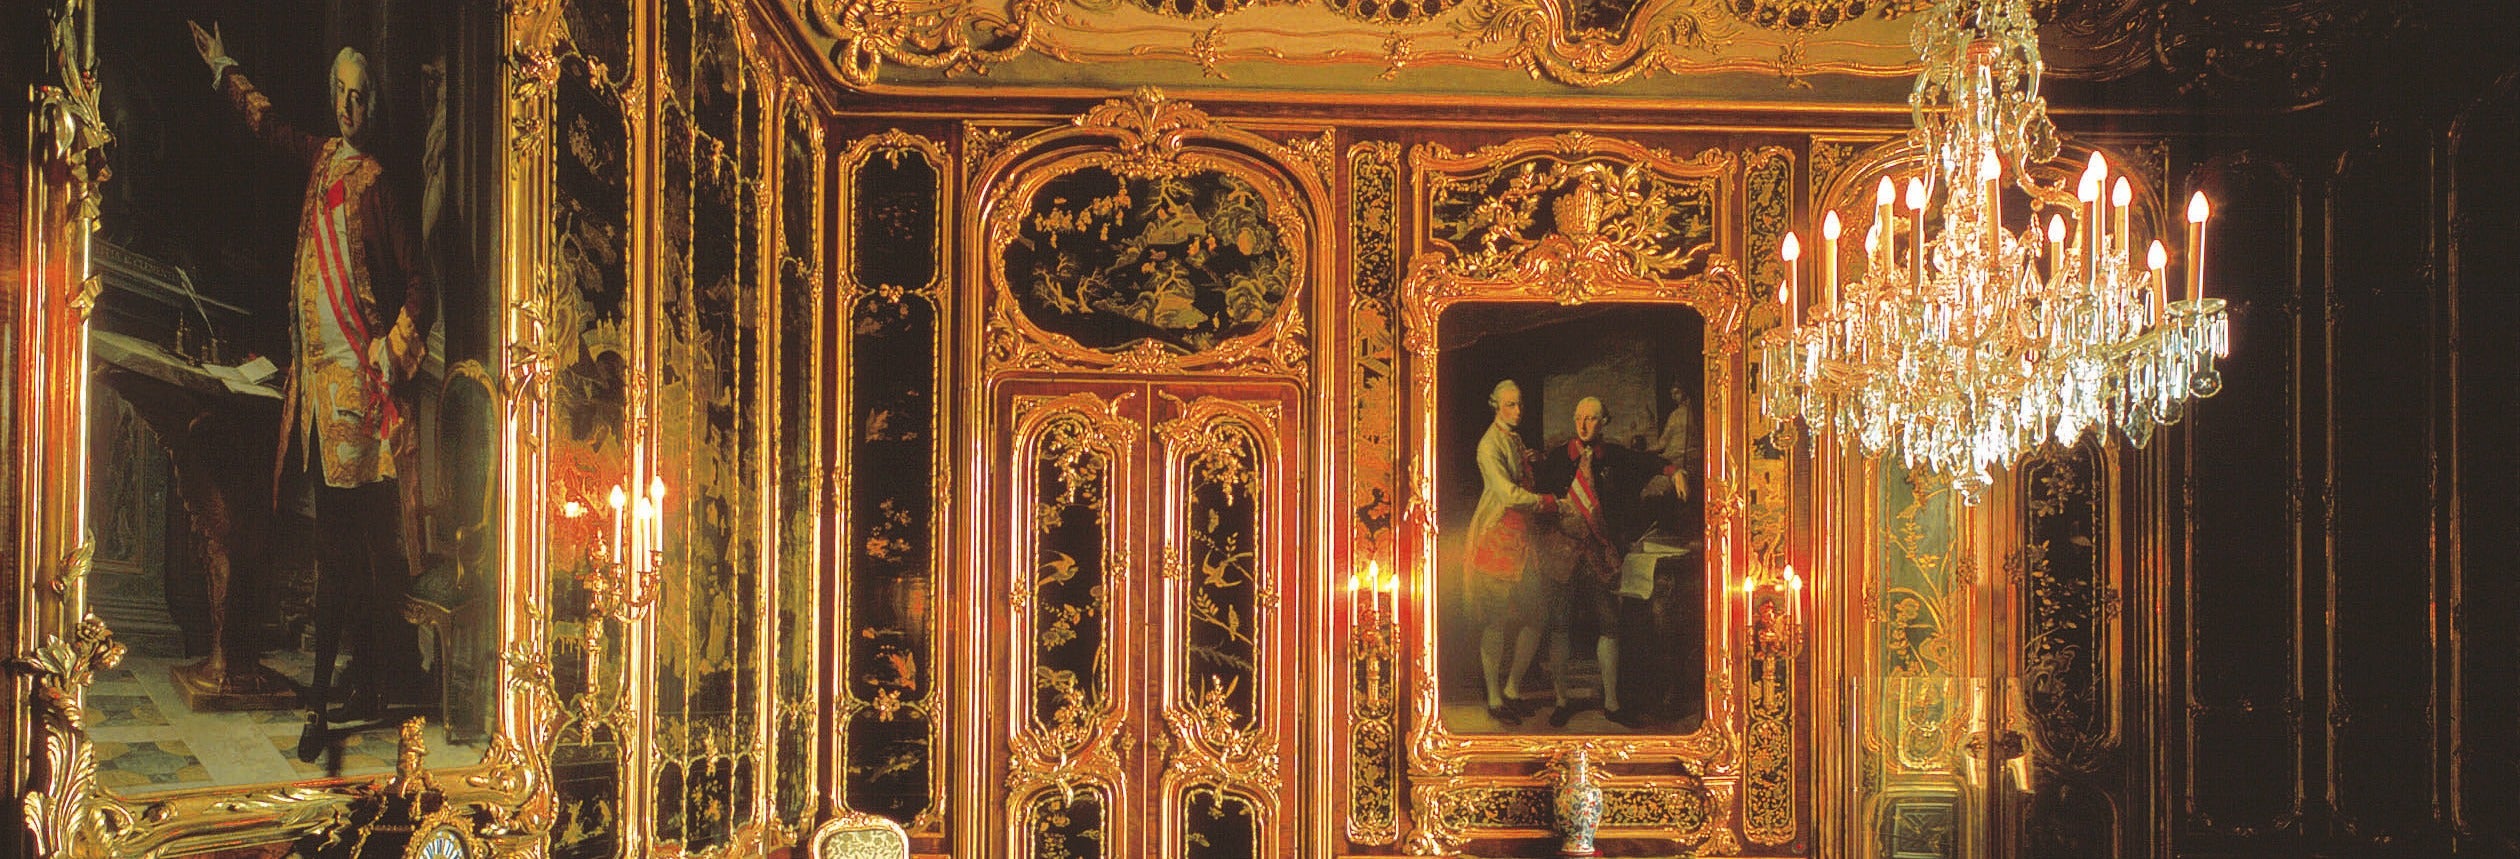 Visita guiada pelo Palácio Schönbrunn